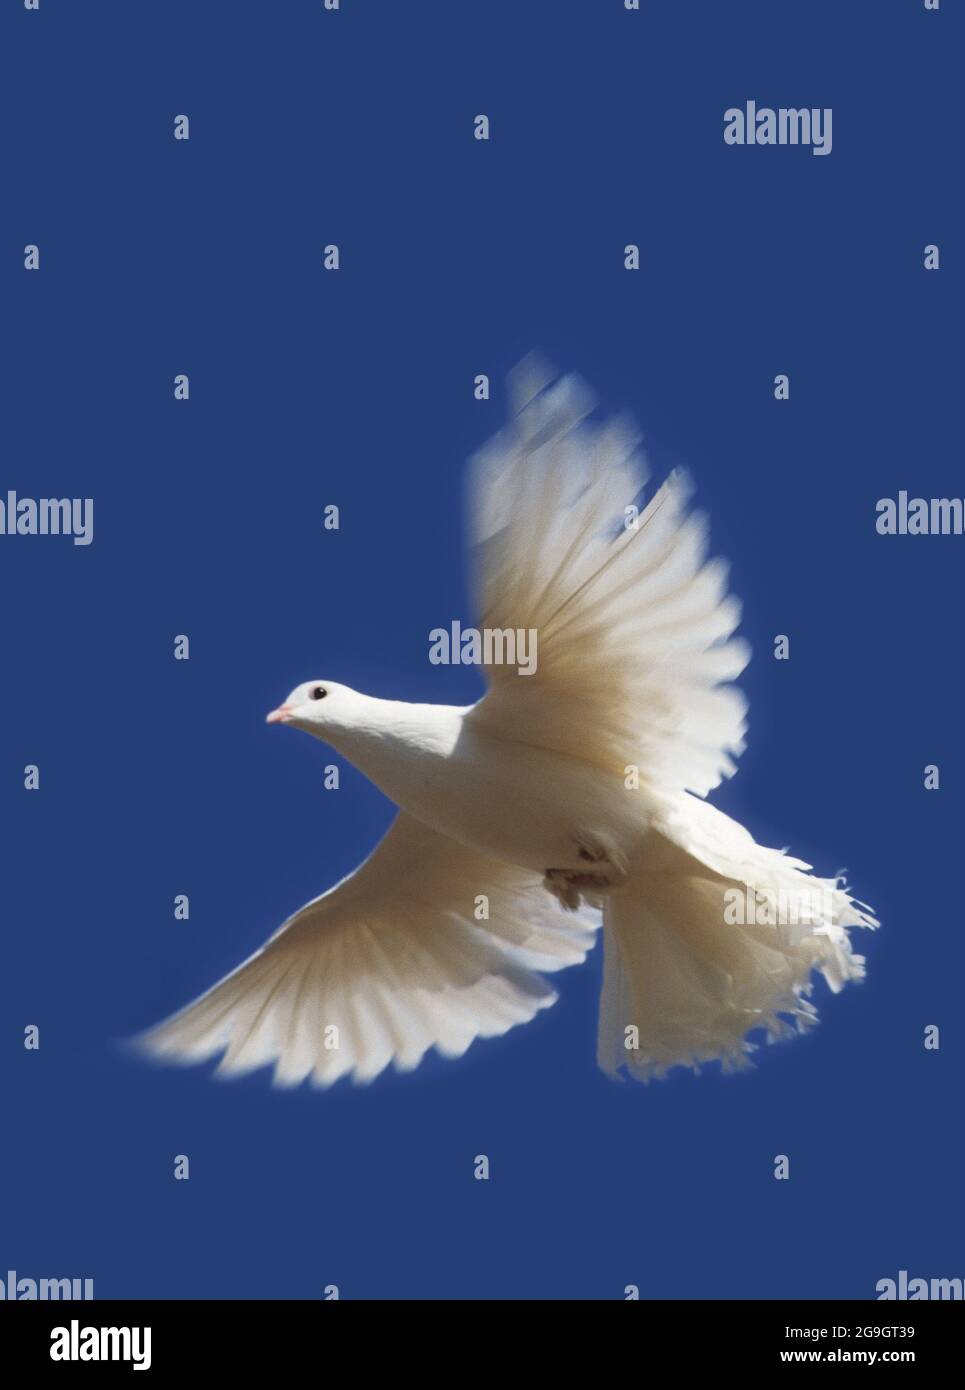 Flying white dove on blue sky background Stock Photo